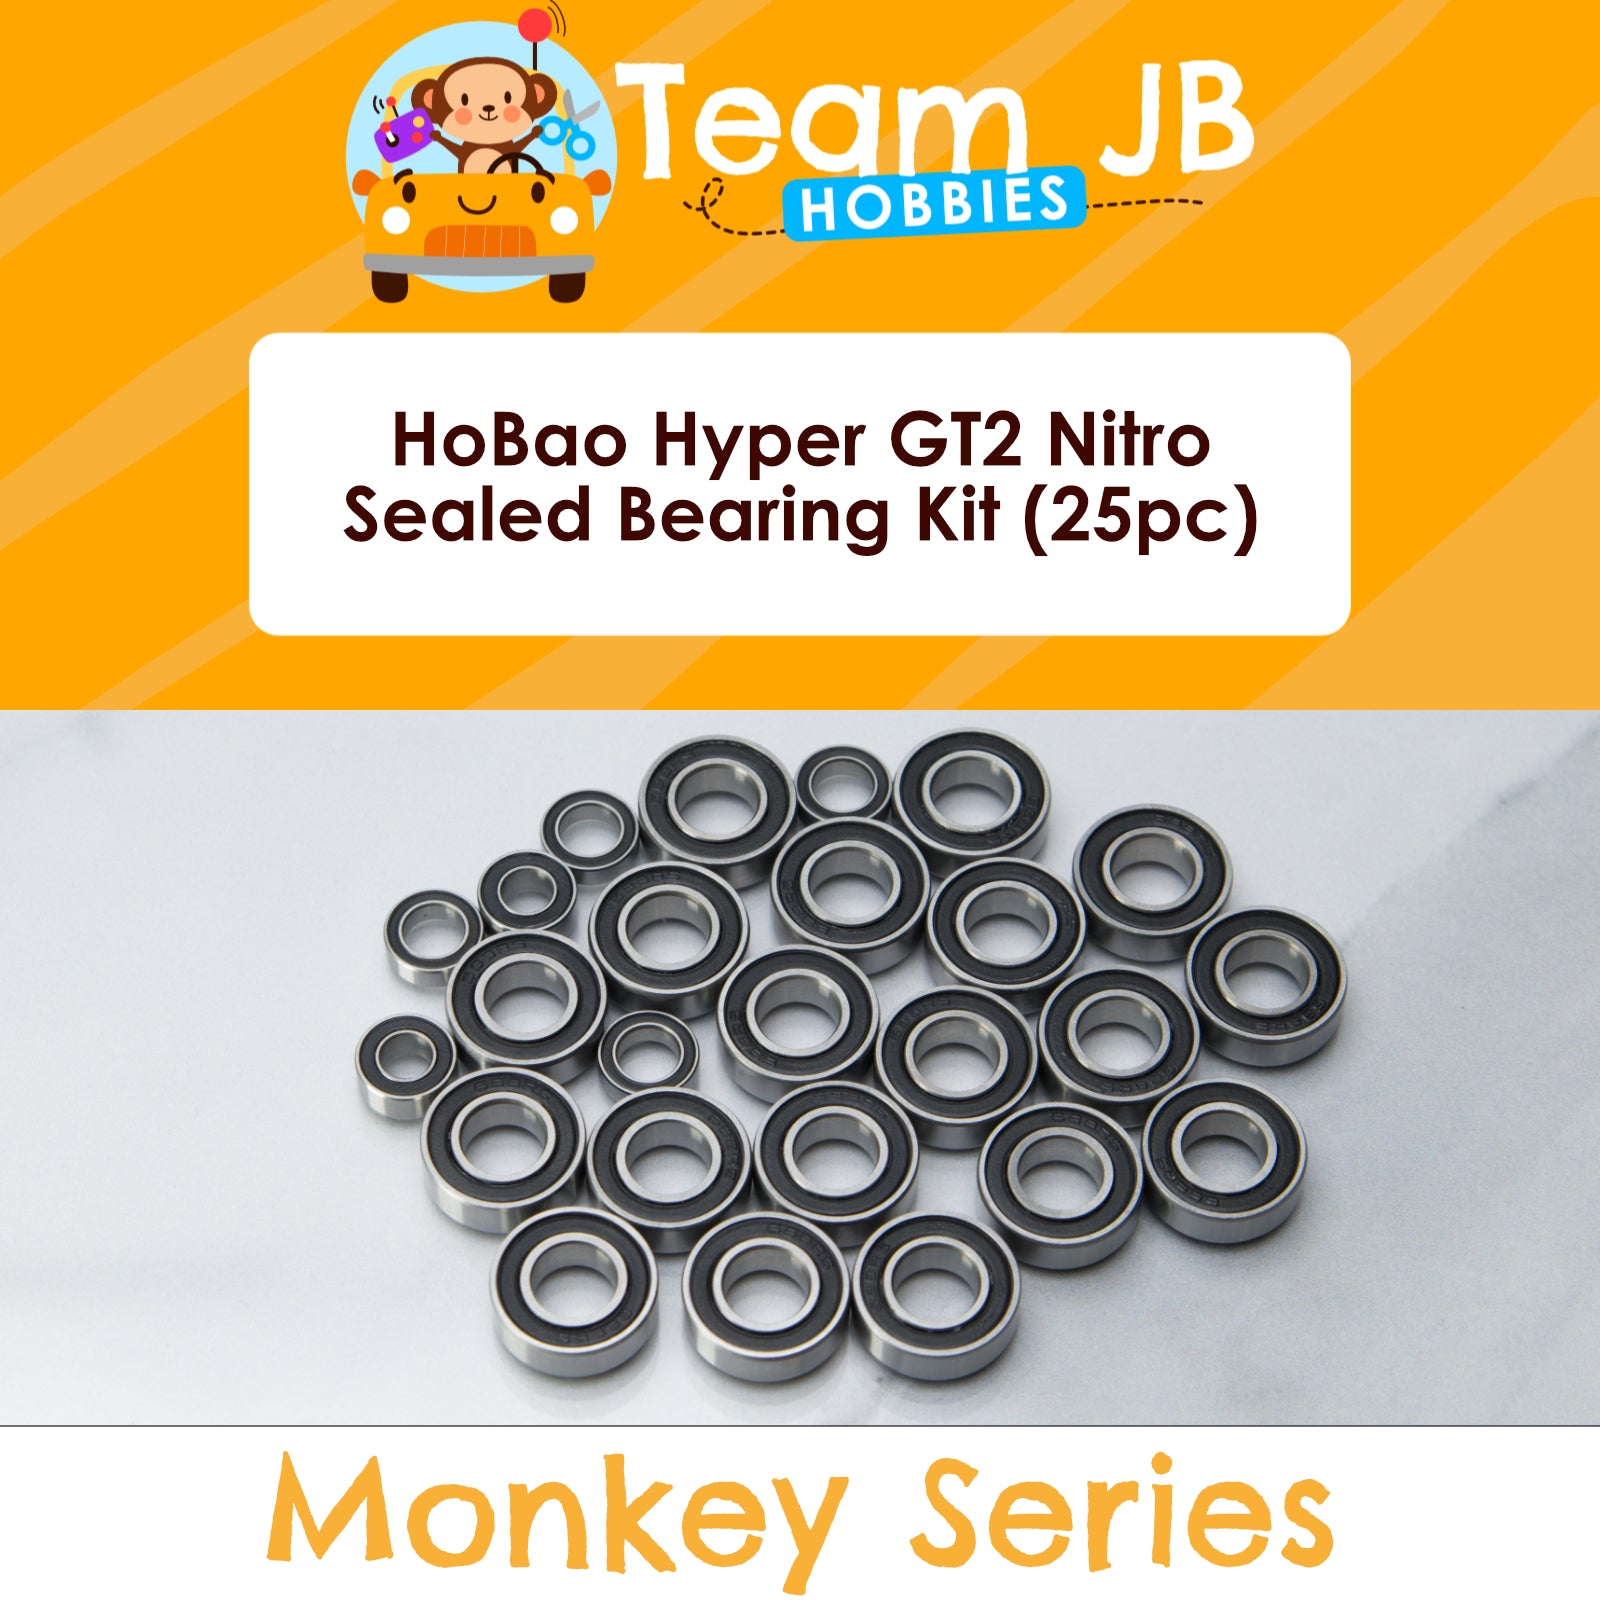 HoBao Hyper GT2 Nitro - Sealed Bearing Kit